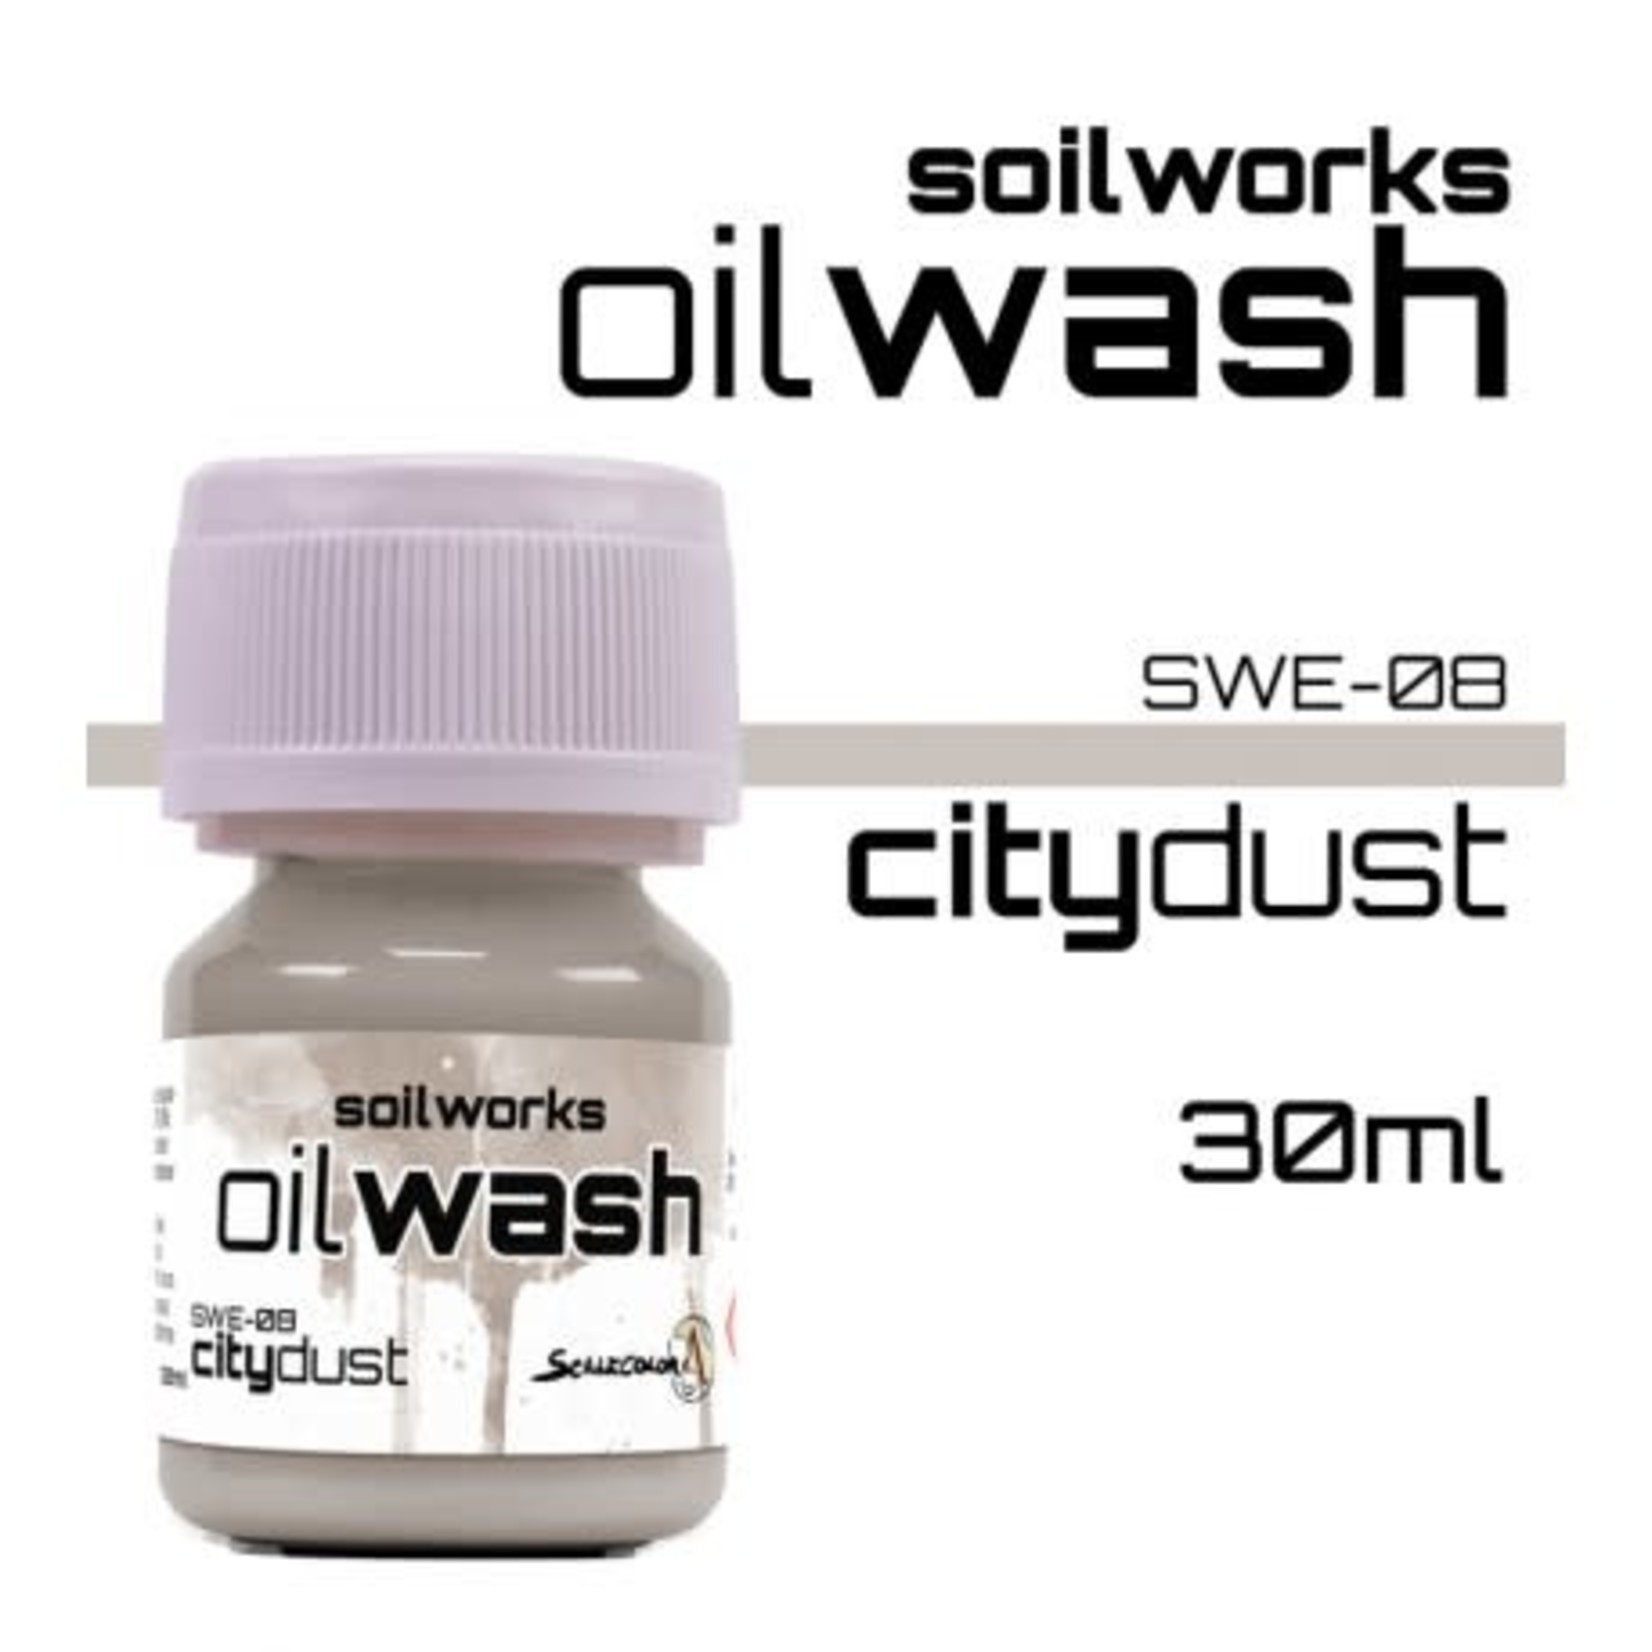 Scale 75 Soil Works Oil Wash SWE-08 Citydust30ml